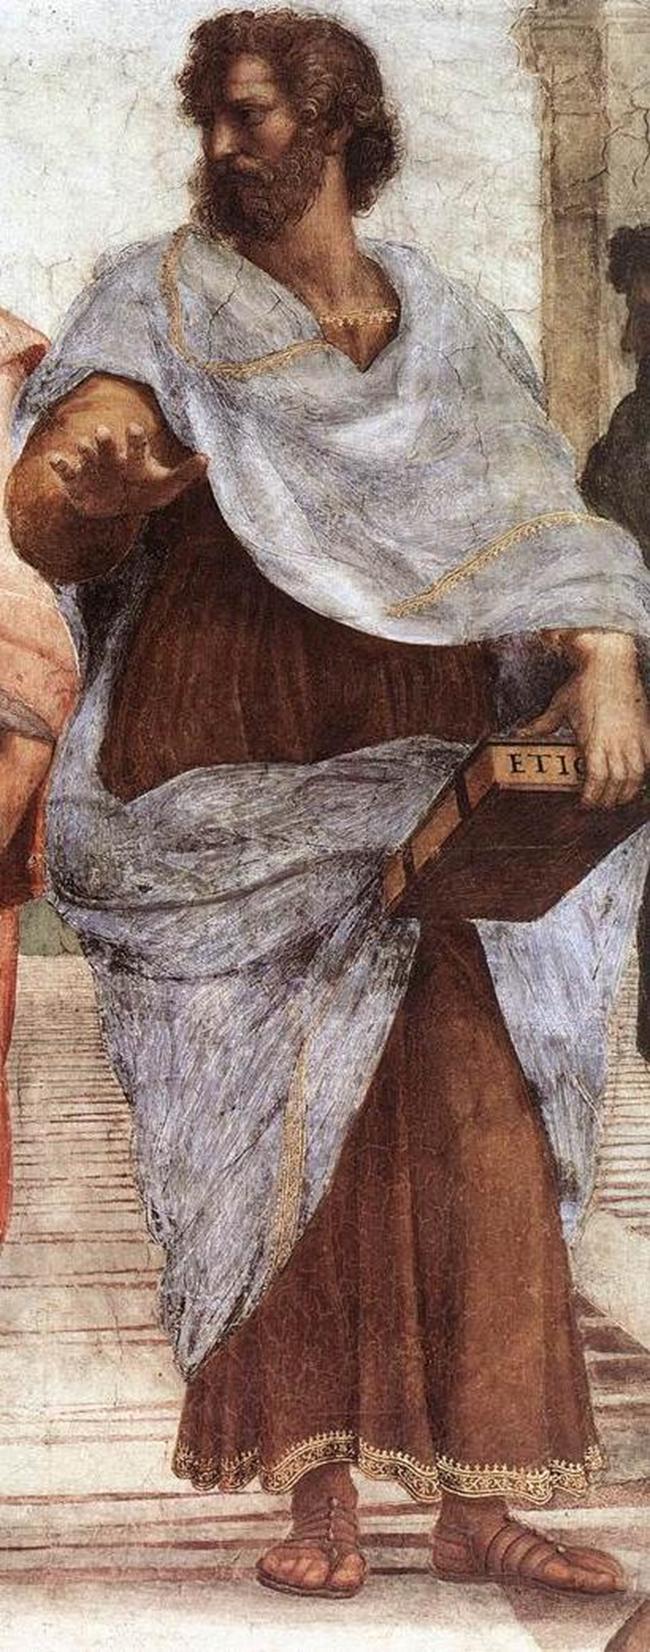 https://upload.wikimedia.org/wikipedia/commons/9/9d/Aristotle_by_Raphael.jpg